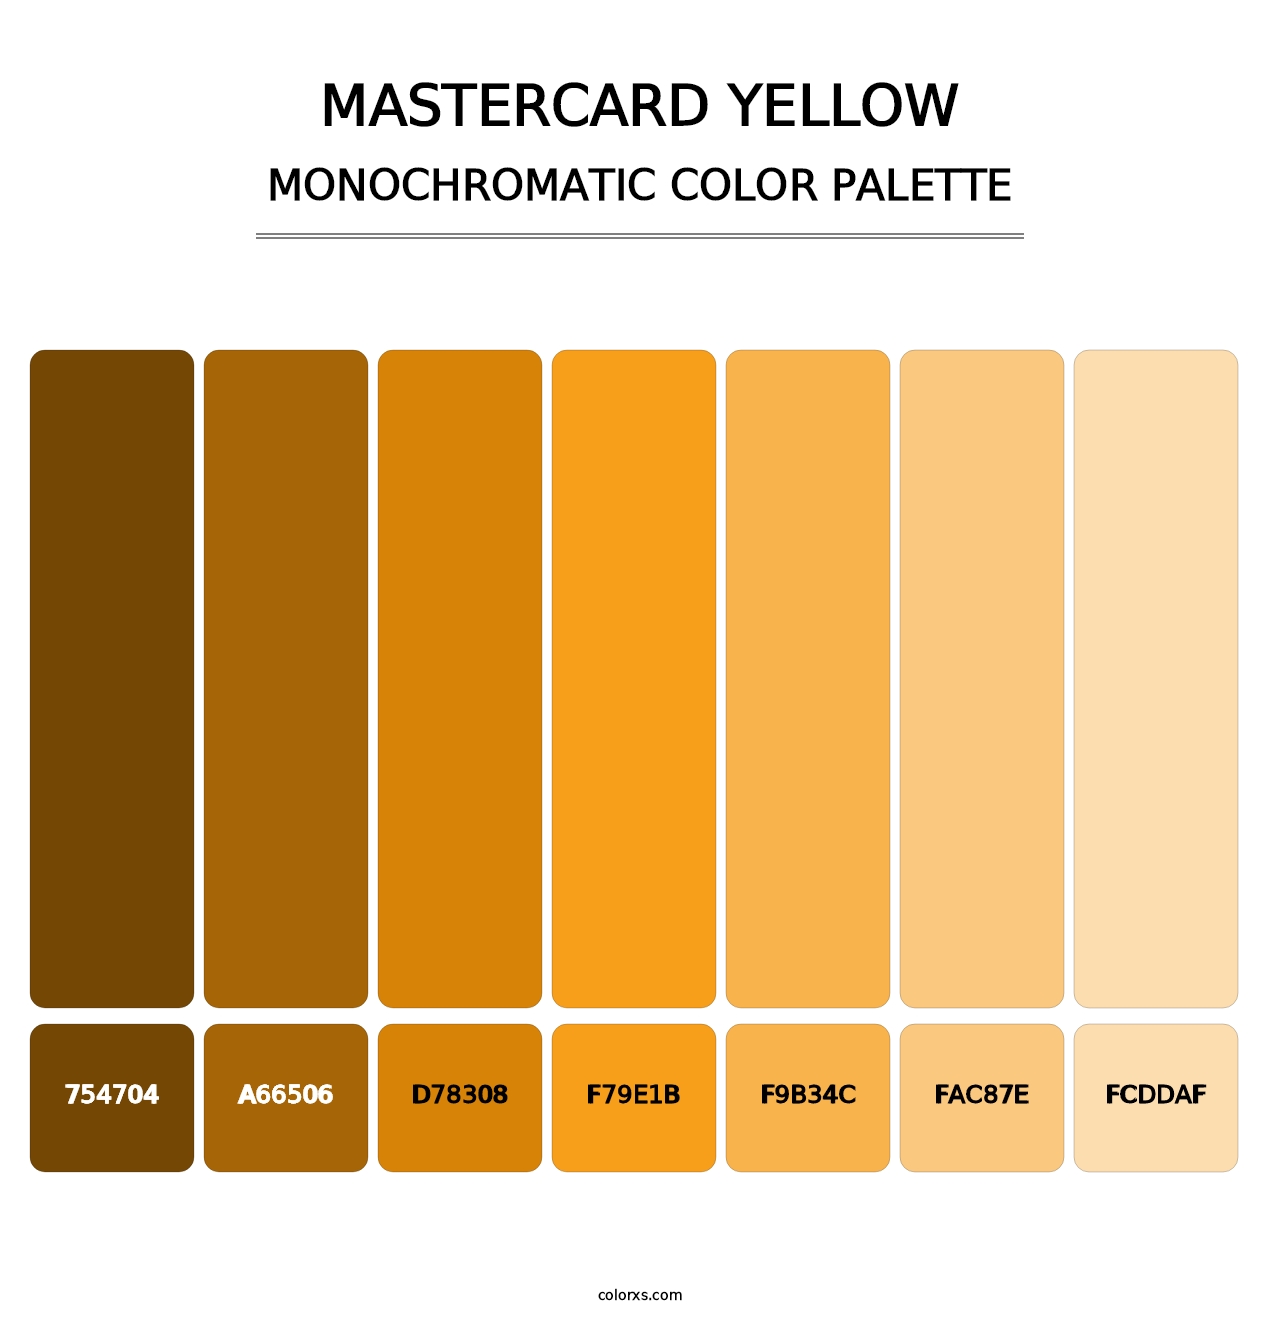 Mastercard Yellow - Monochromatic Color Palette